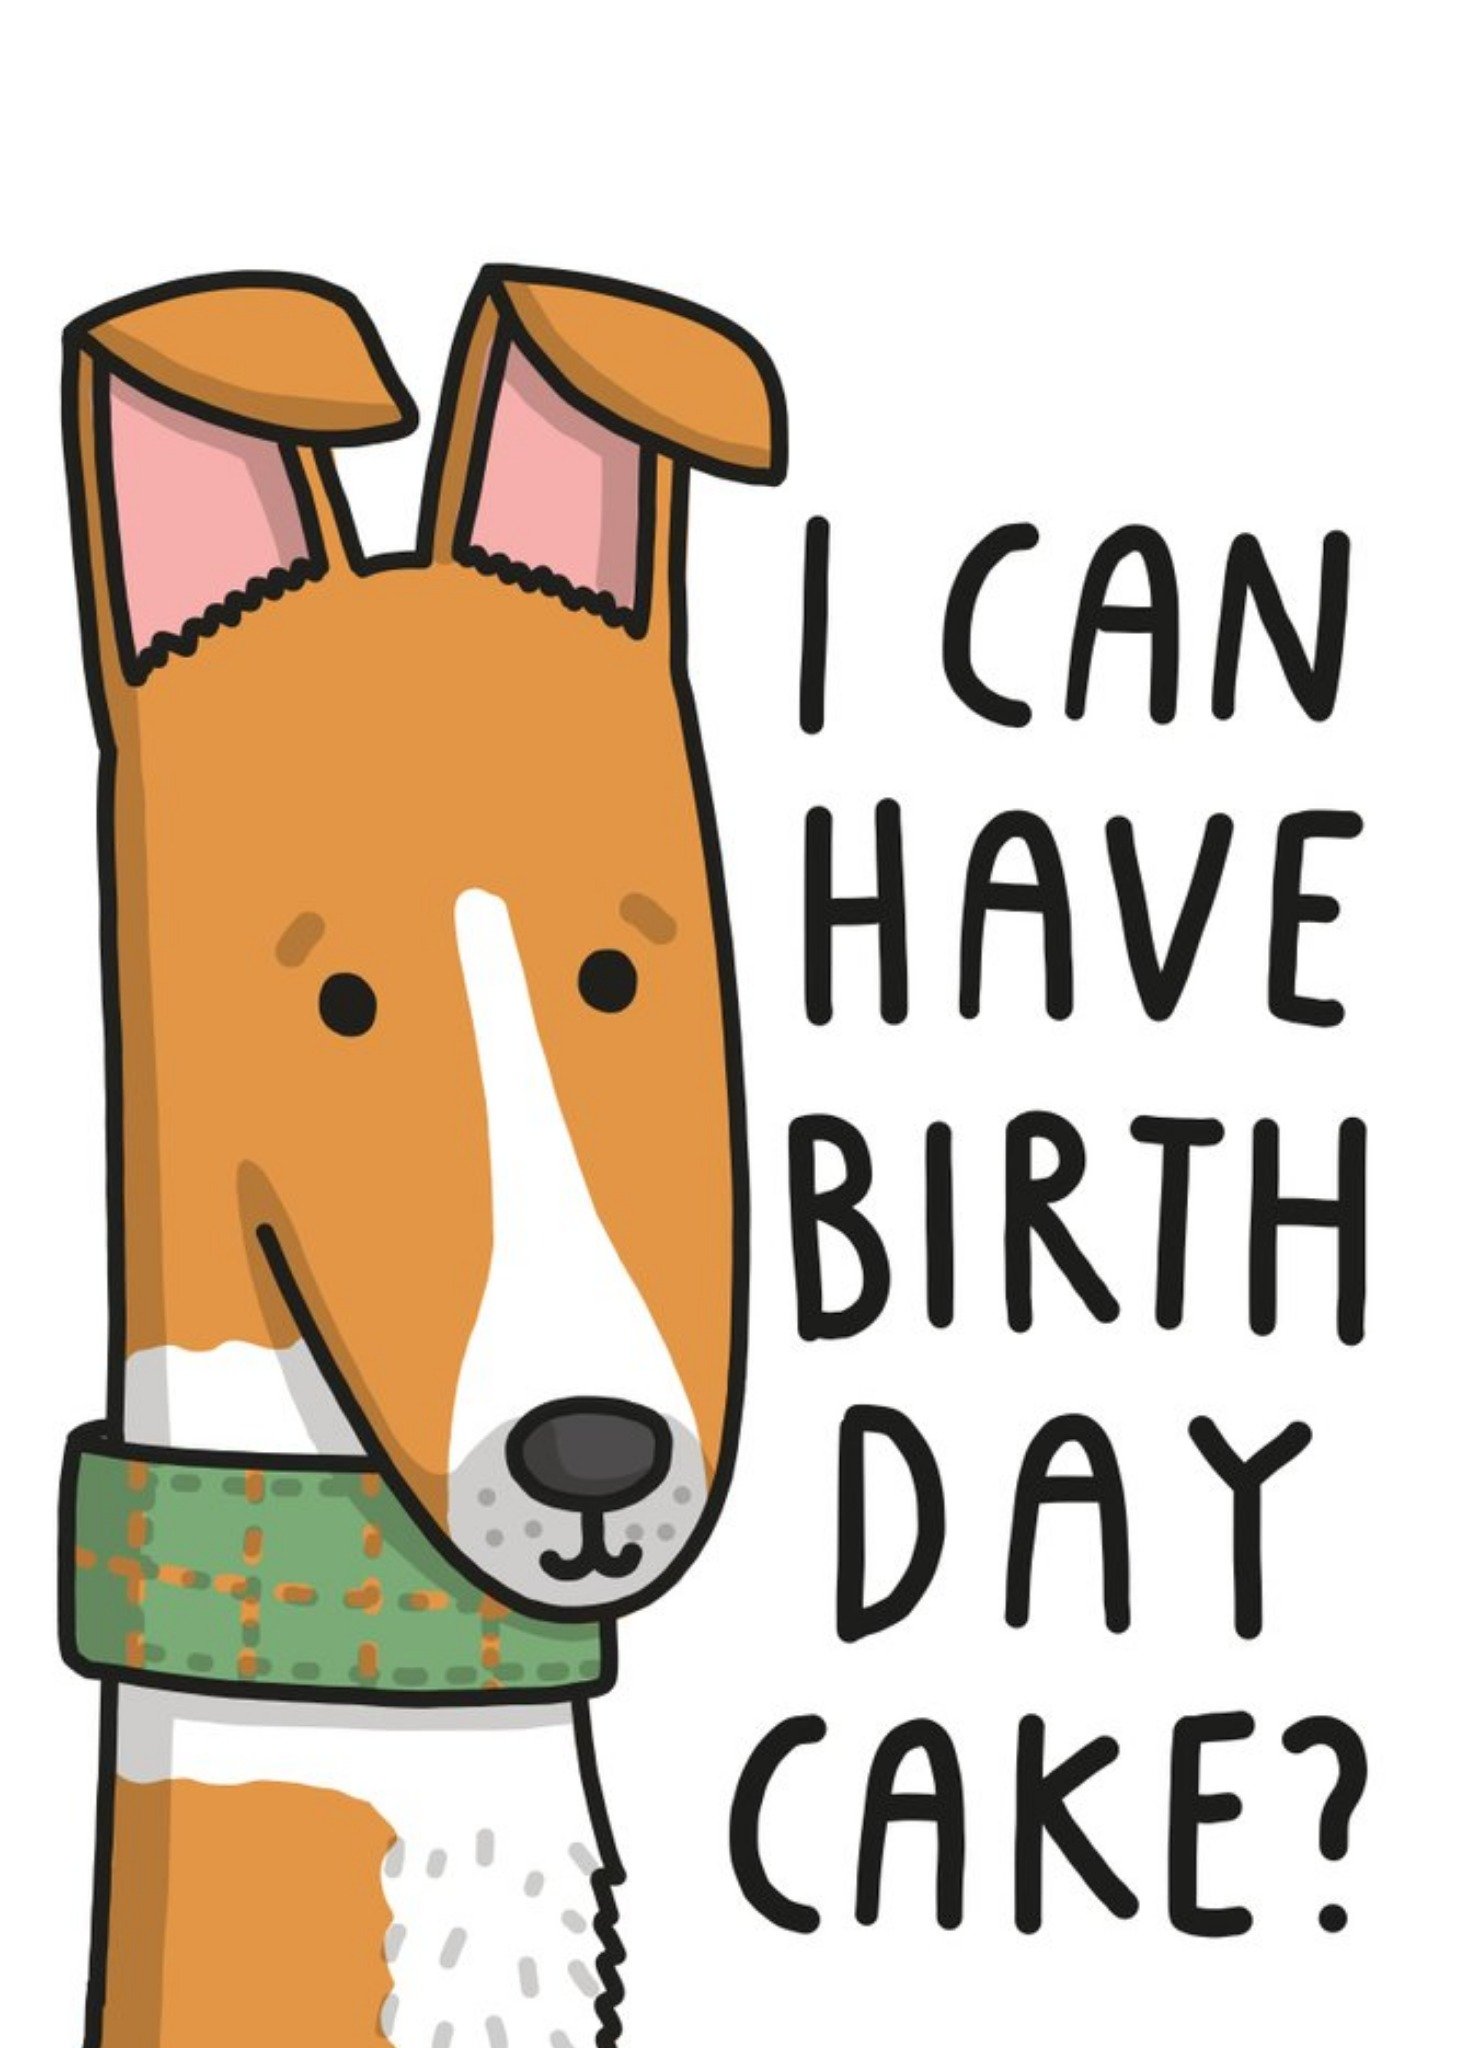 Family Guy Illustration Of A Dog Birthday Card Ecard